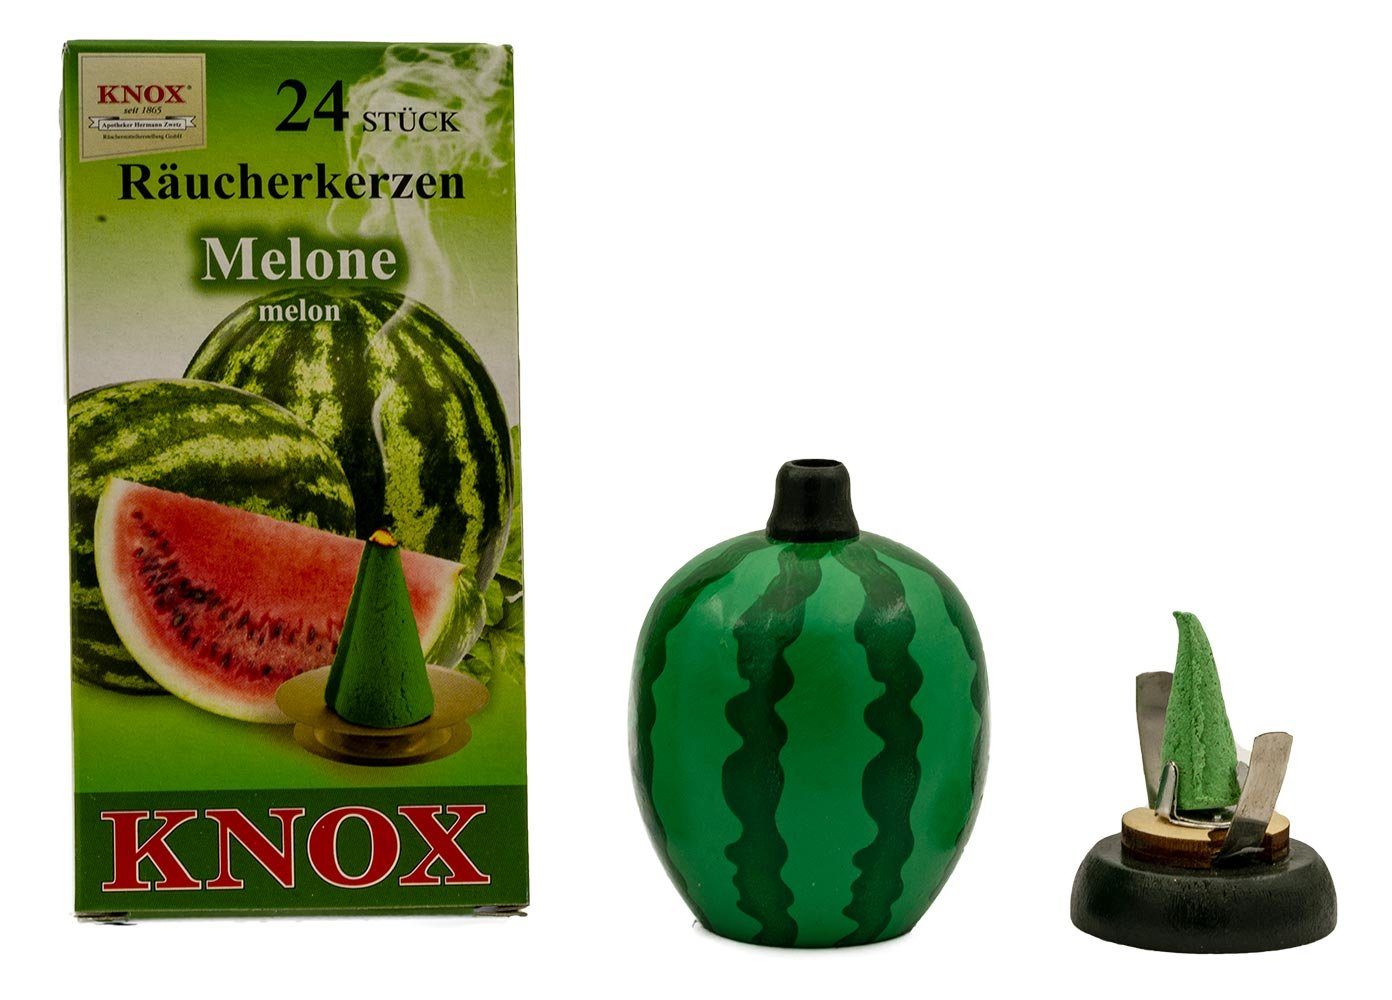 KNOX Räucherhaus Melonen-Set, Melonen-Räucherfigur inkl. Räucherkerzen Melonen-Duft mit 24